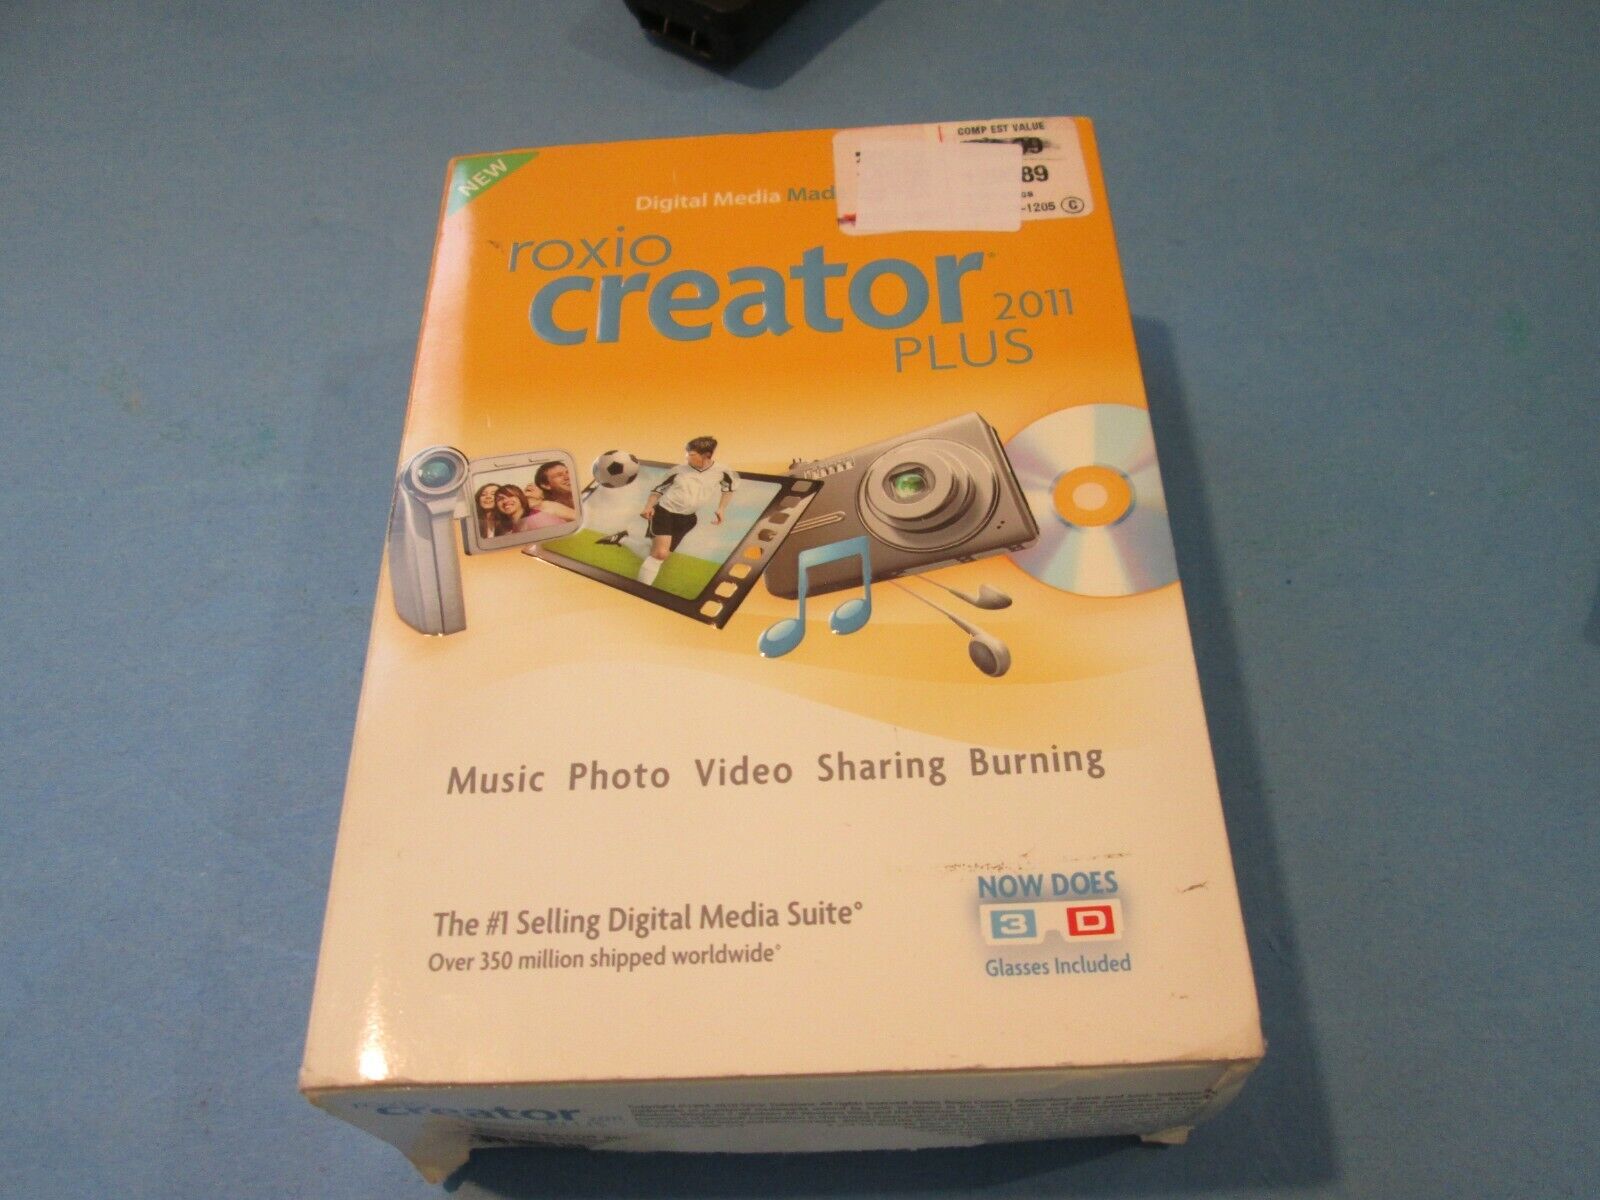 Roxio Creator 2011 Plus w/ Manual PC DVD manage music photos video media suite